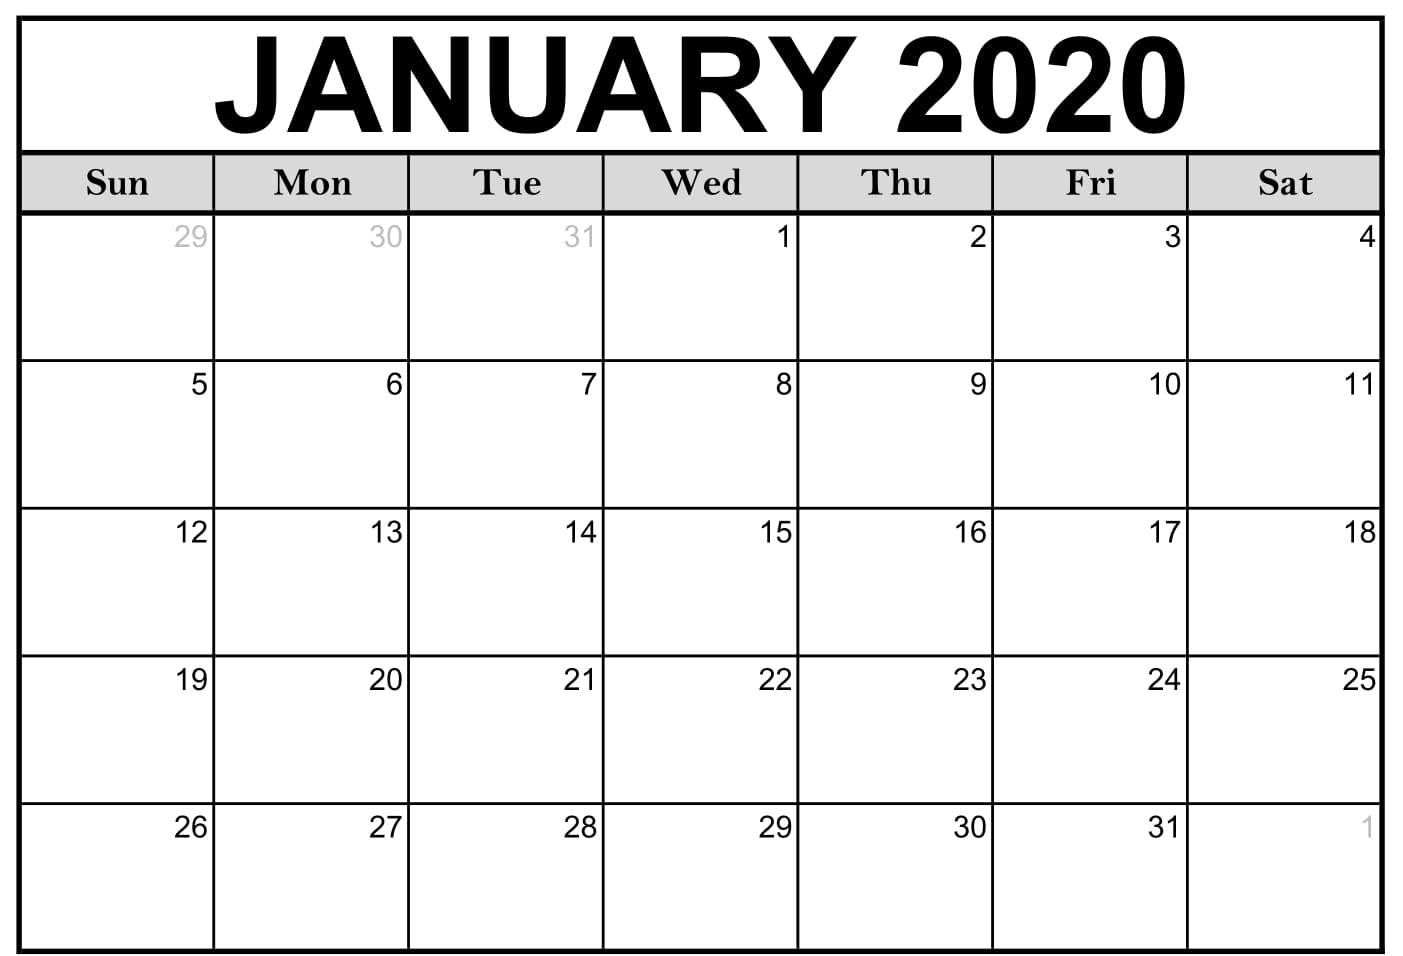 January 2020 Calendar Template | Free Printable Calendar